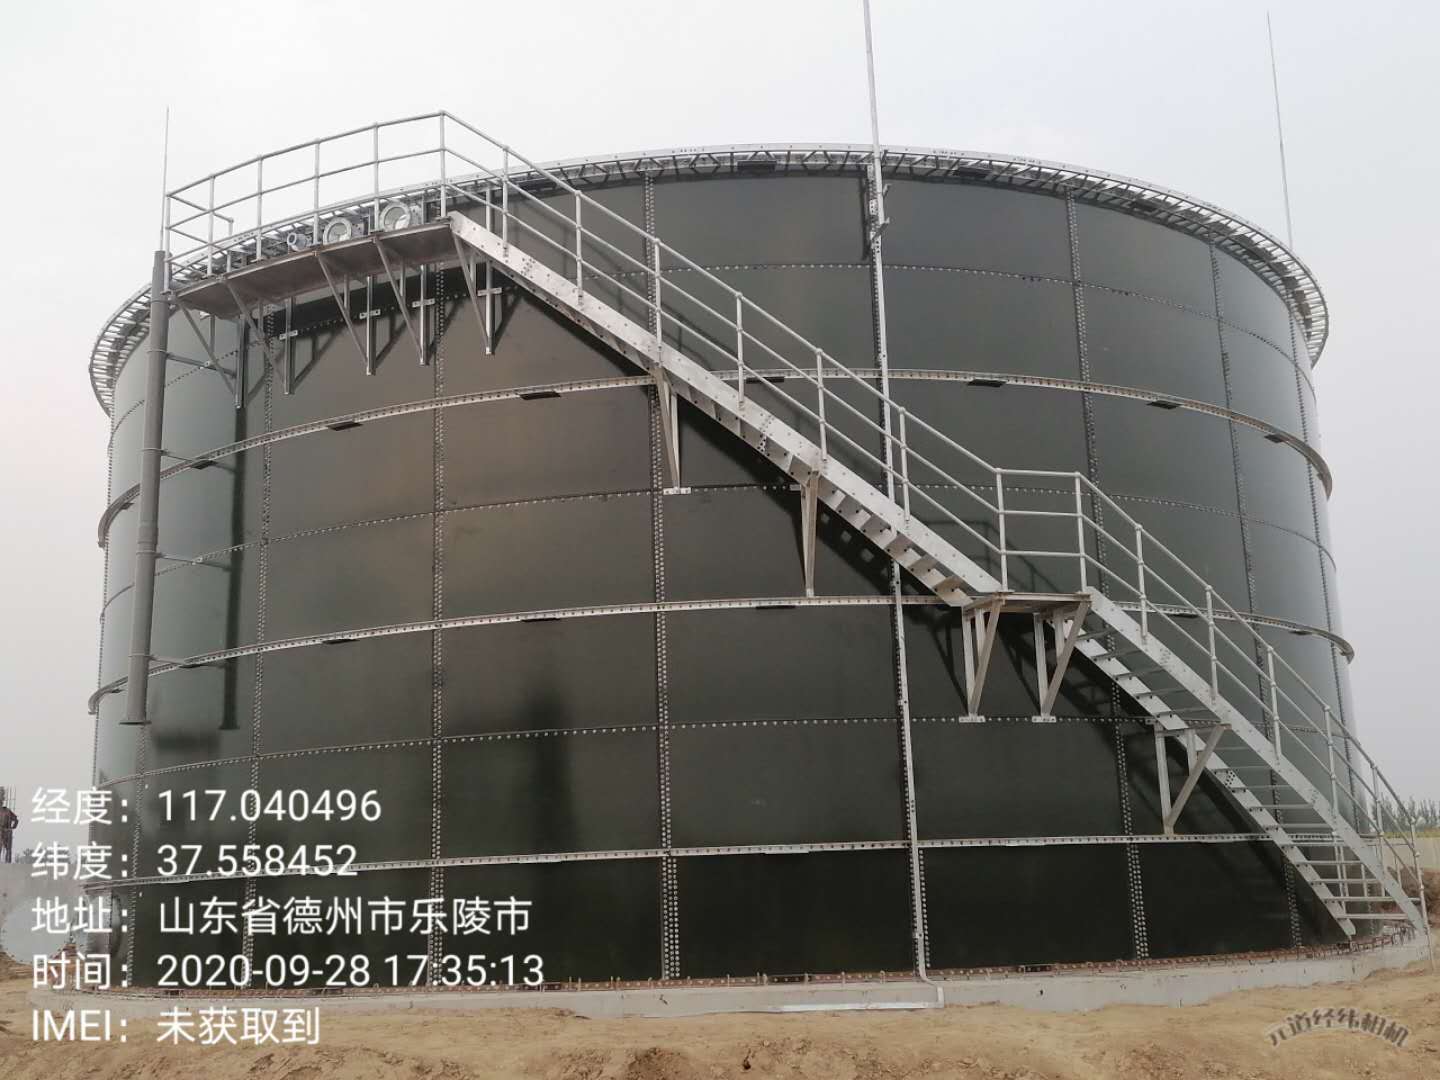 2020. Shandong Dezhou Chenjia pig farm  enameled bolted tank as biogas digester tank18330x8400   2216m³  contact :jane@bsltank.com  008615373670441